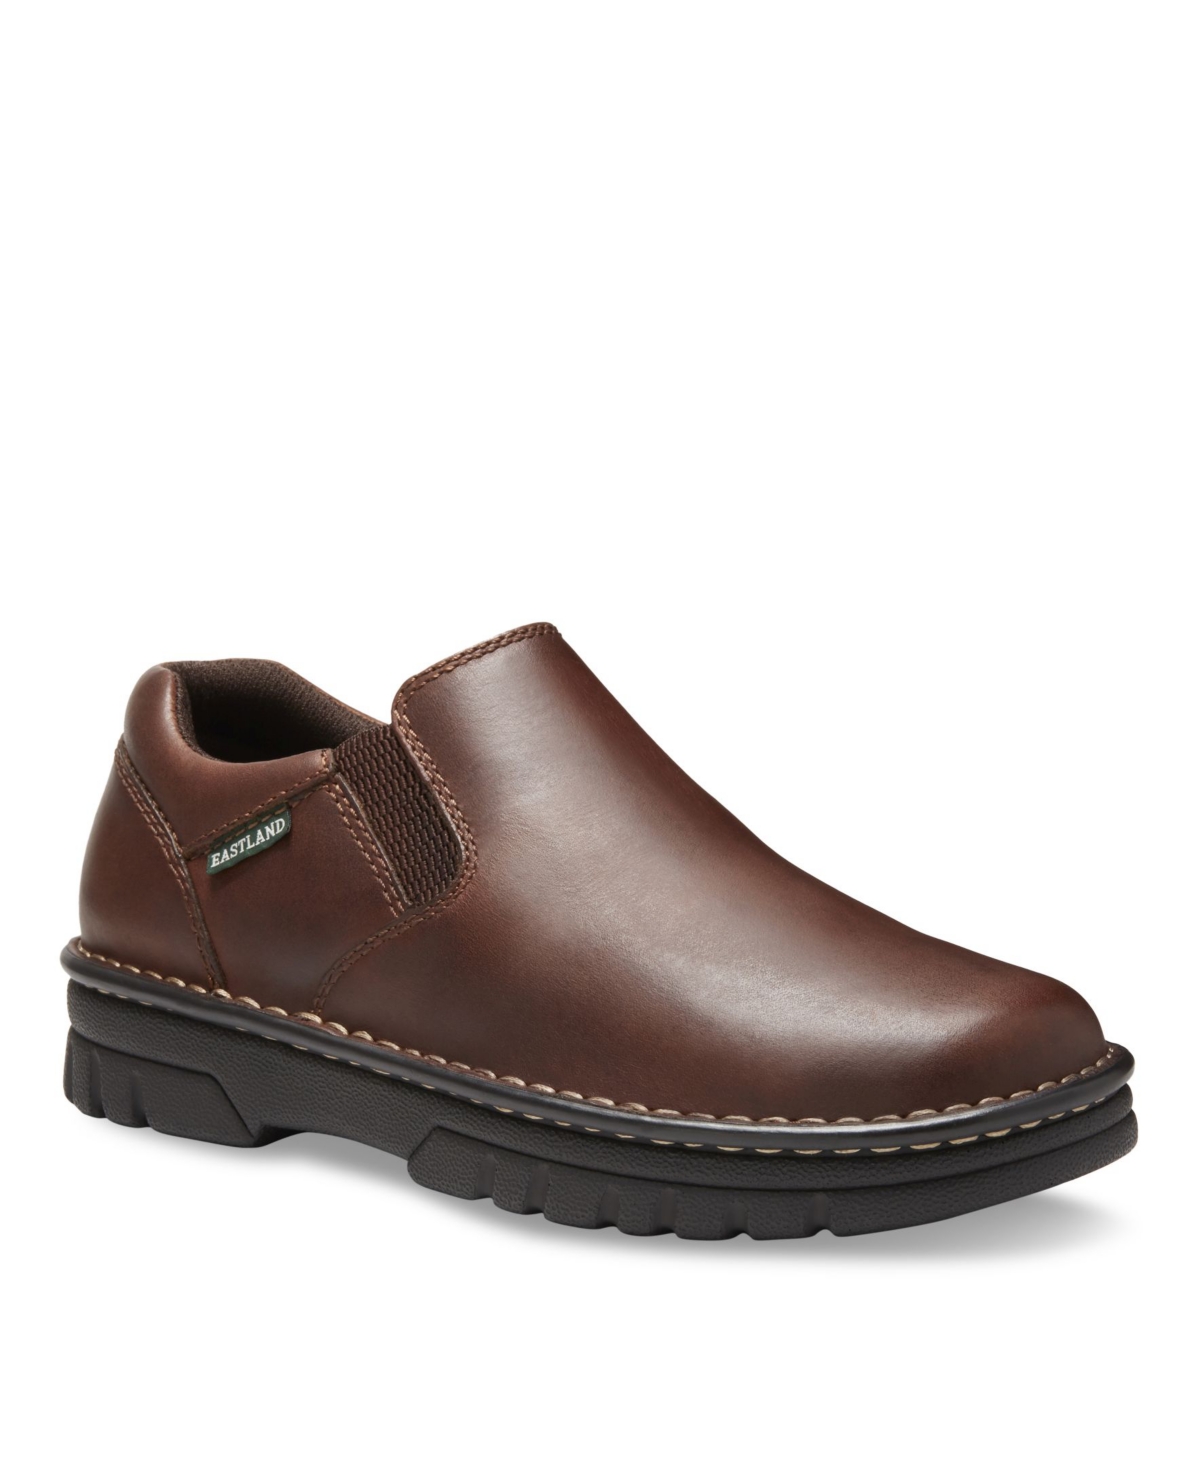 Eastland Shoe Newport Slip-On Men's Shoes